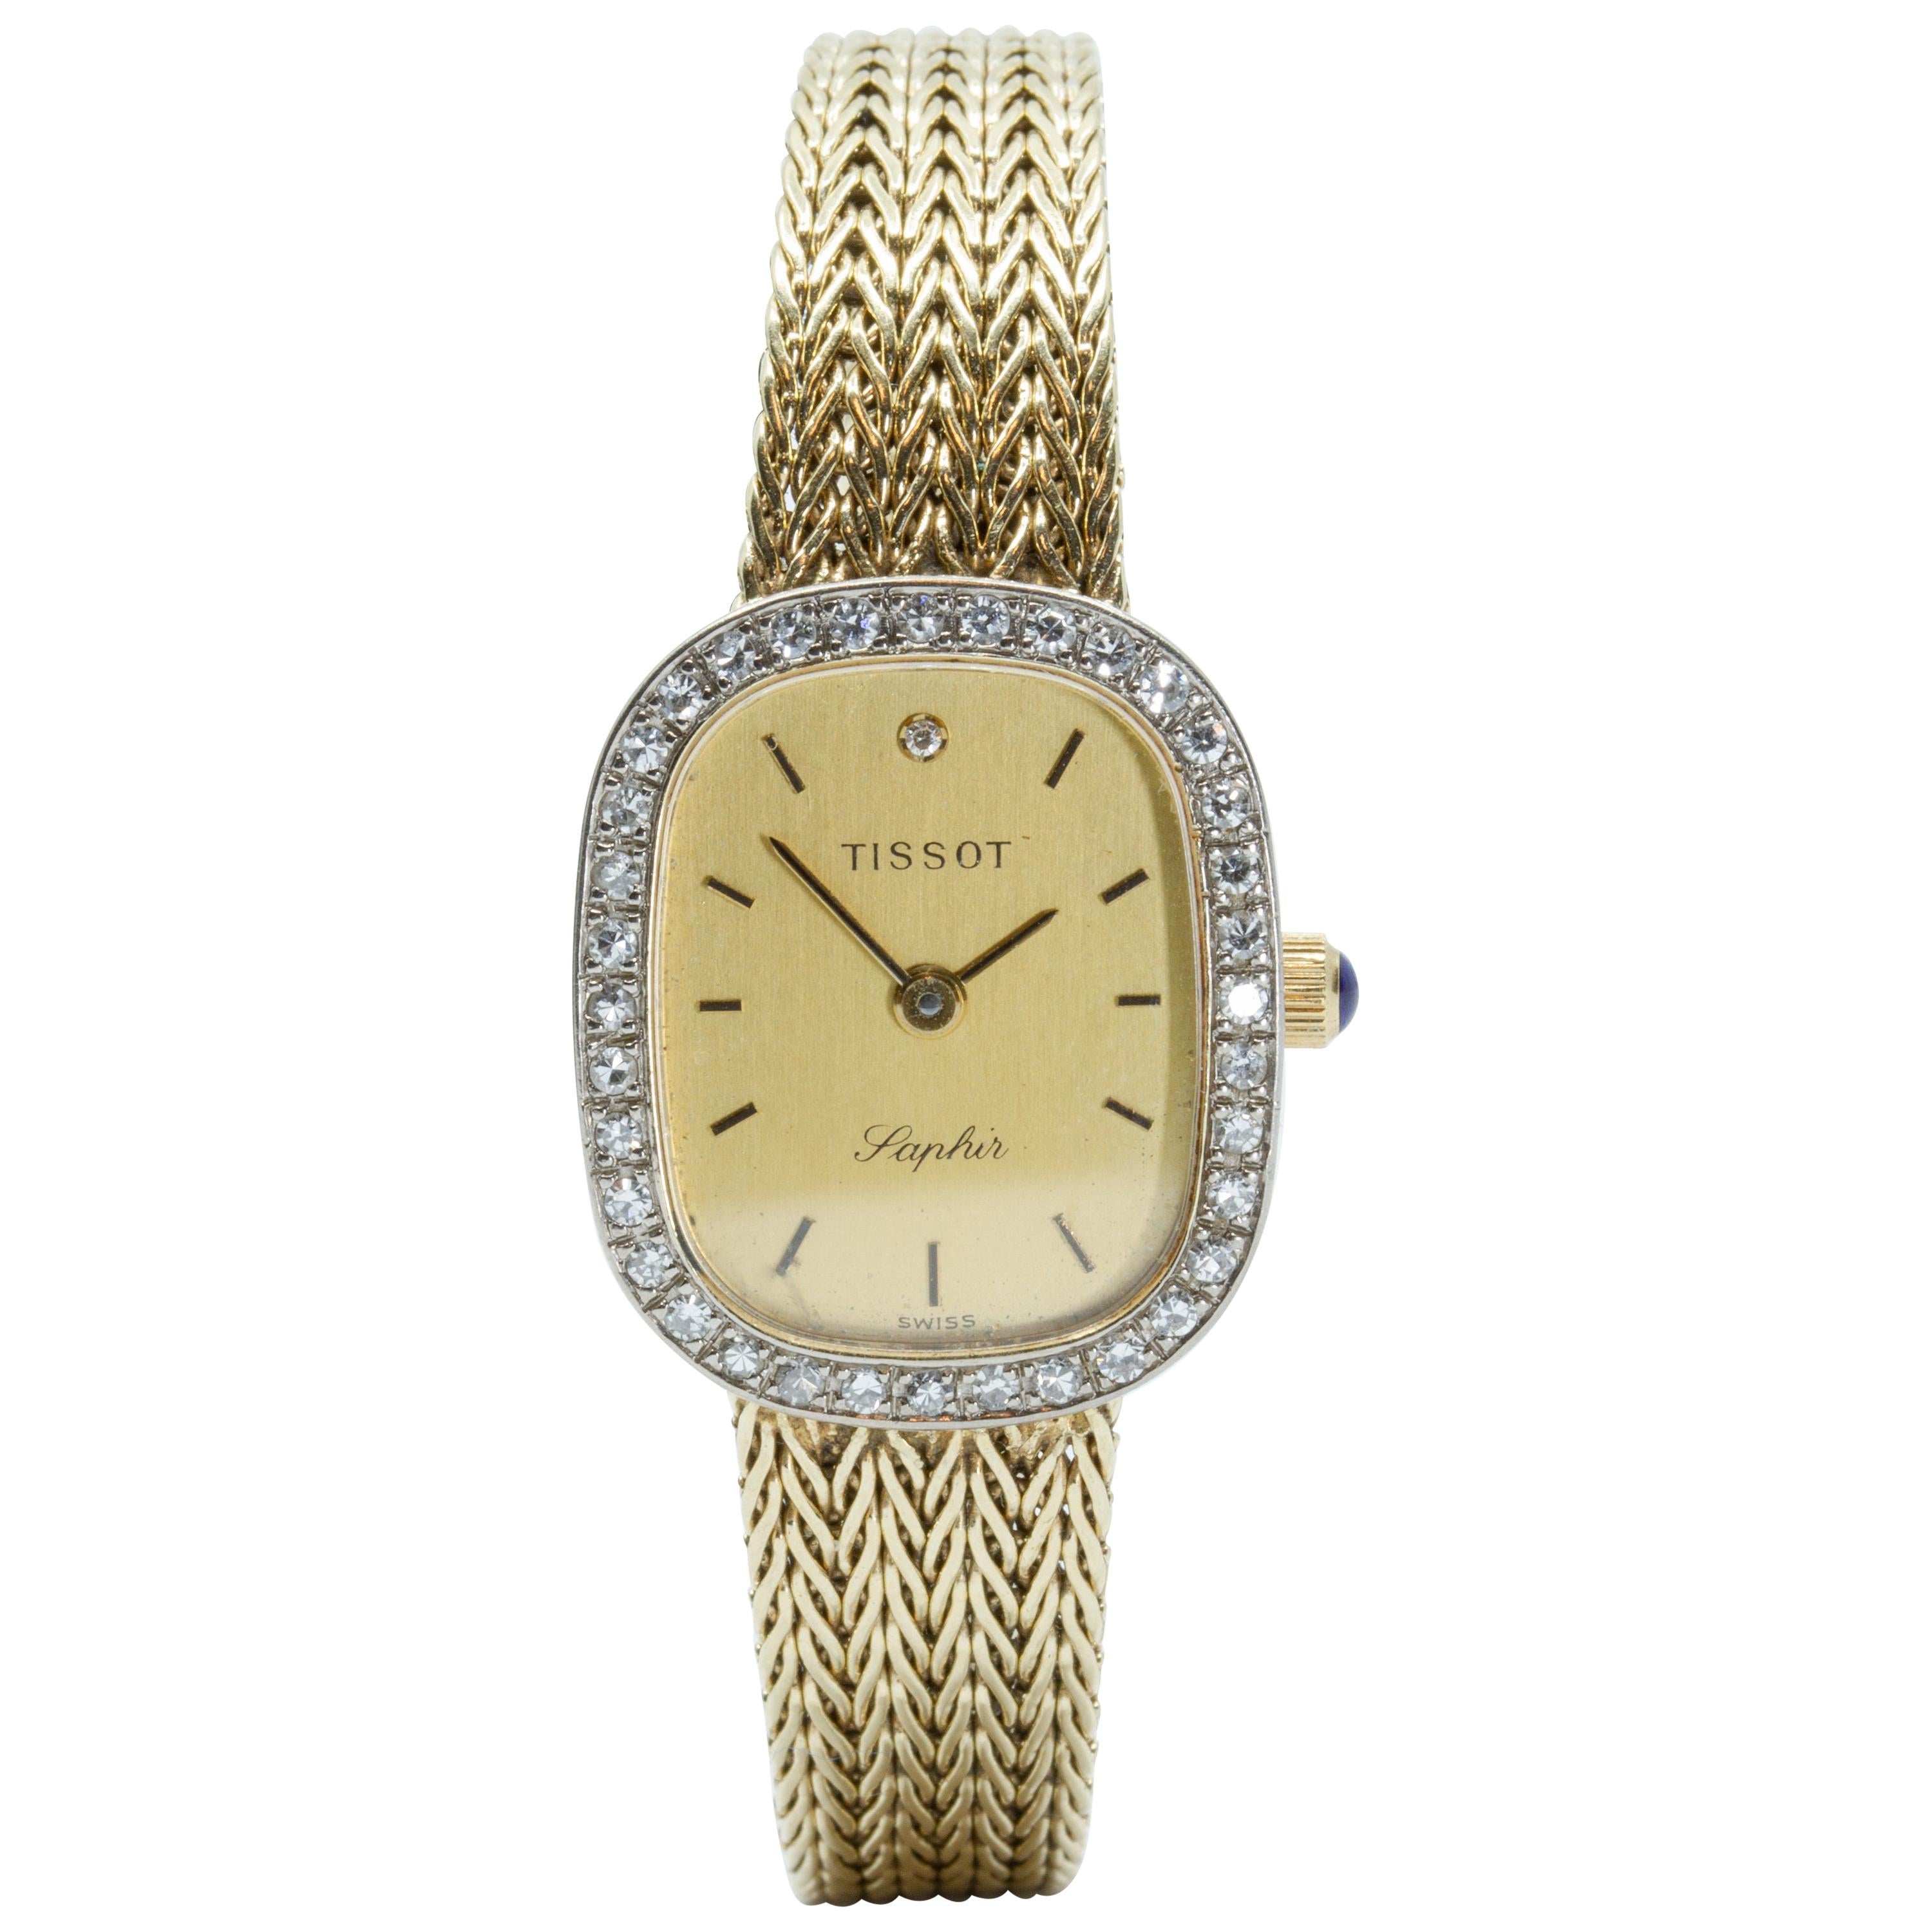 Tissot Ladies circa 1980s Diamond and 14 Karat Gold Wristwatch Signed "Saphir"